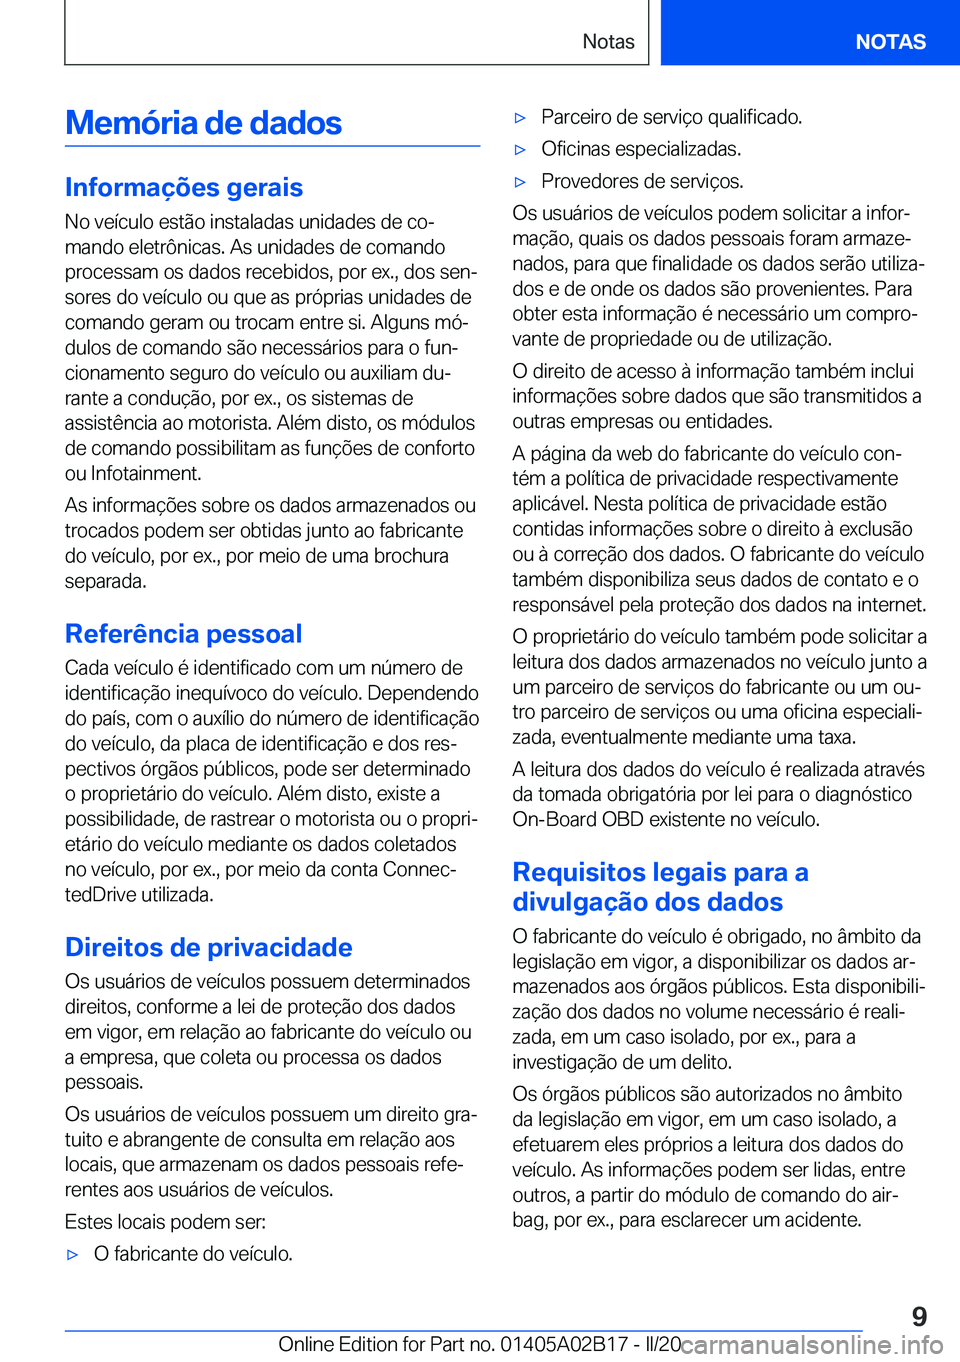 BMW X1 2020  Manual do condutor (in Portuguese) �M�e�m�ó�r�i�a��d�e��d�a�d�o�s
�I�n�f�o�r�m�a�